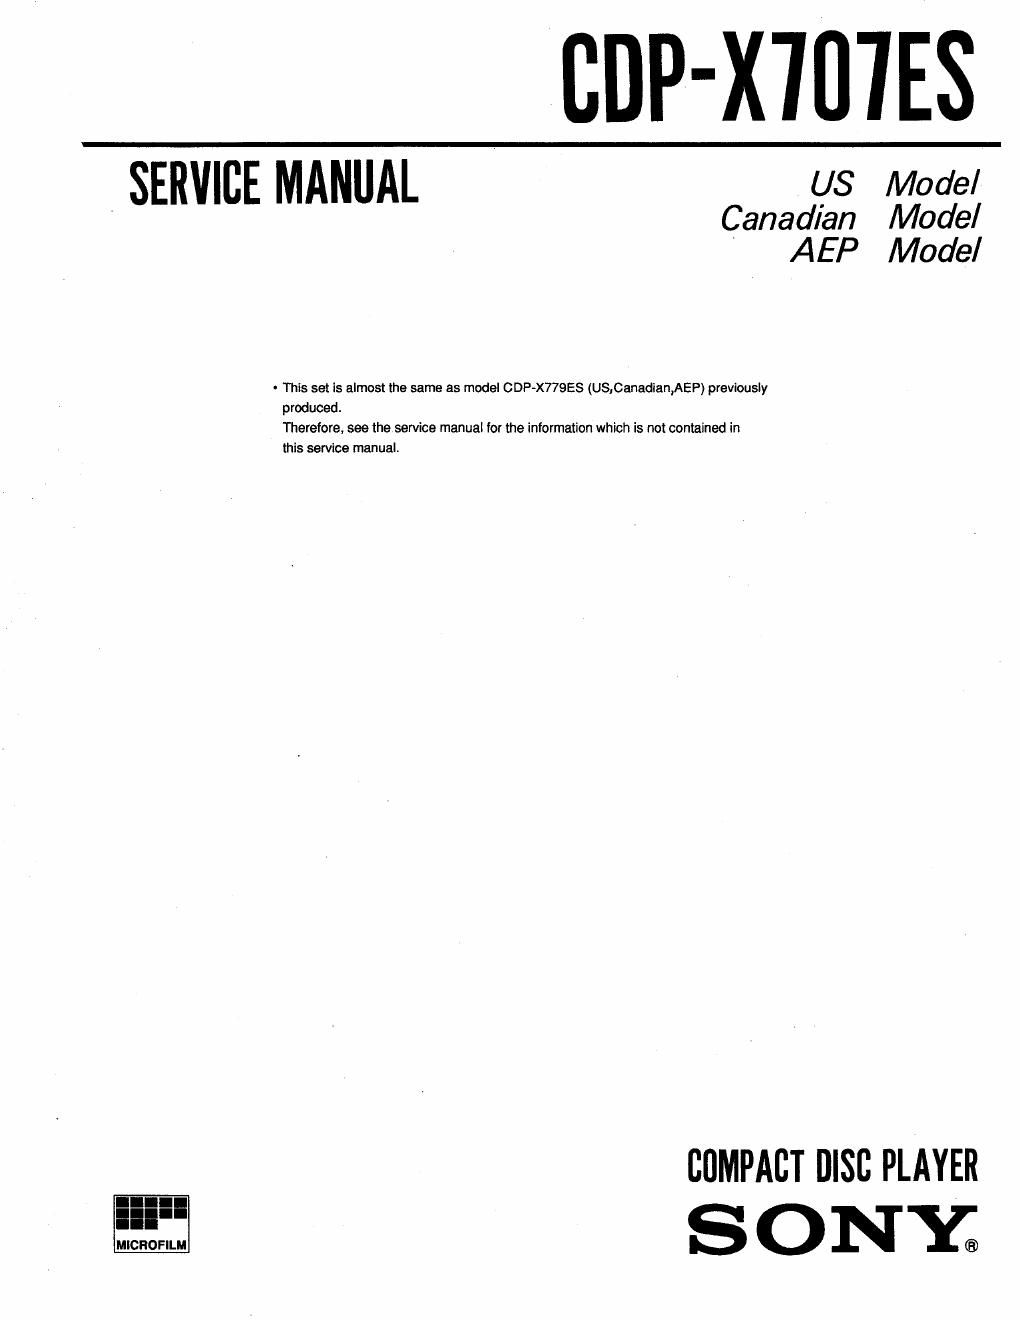 sony cdp x 707 es service manual